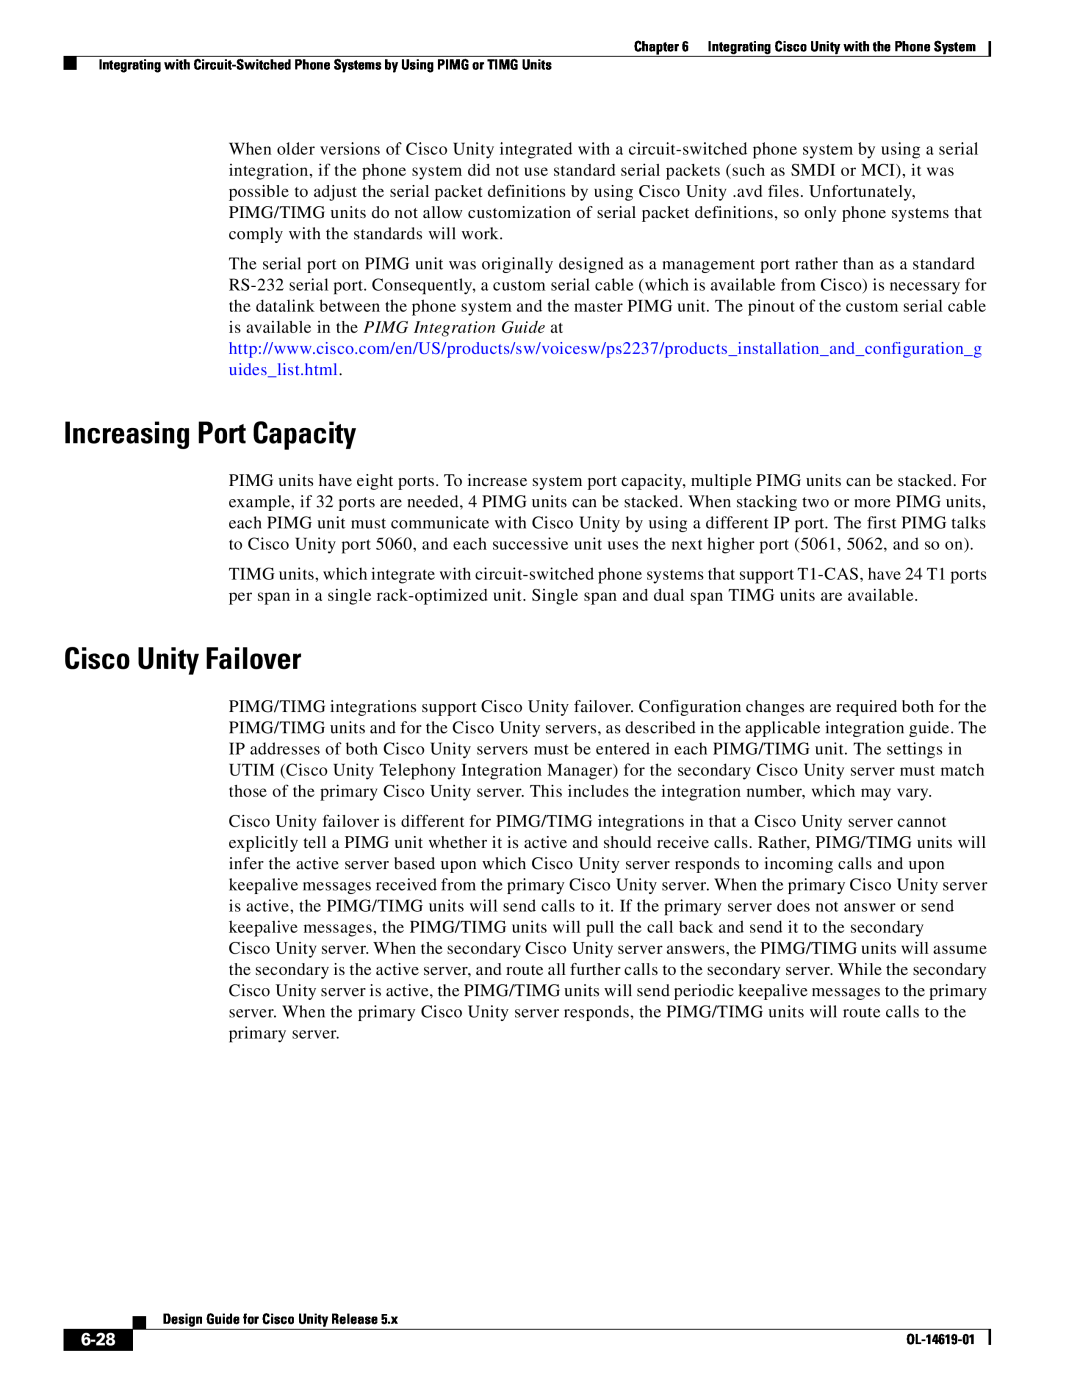 Cisco Systems OL-14619-01 manual Increasing Port Capacity, Cisco Unity Failover, 6-28 